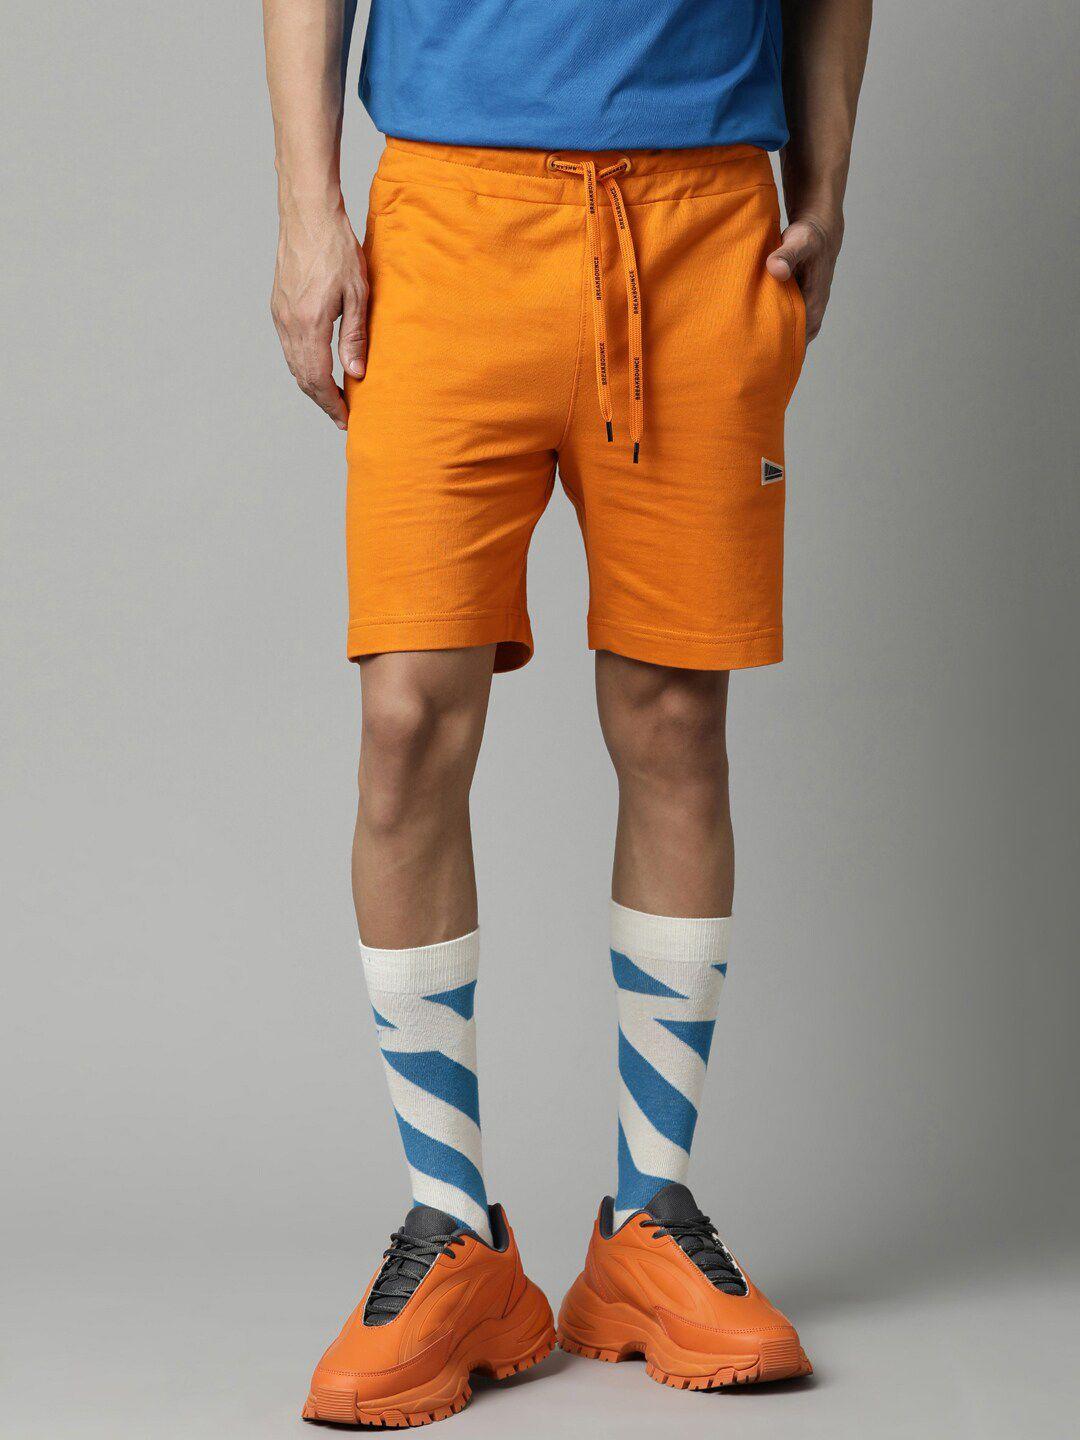 breakbounce men cotton orange shorts